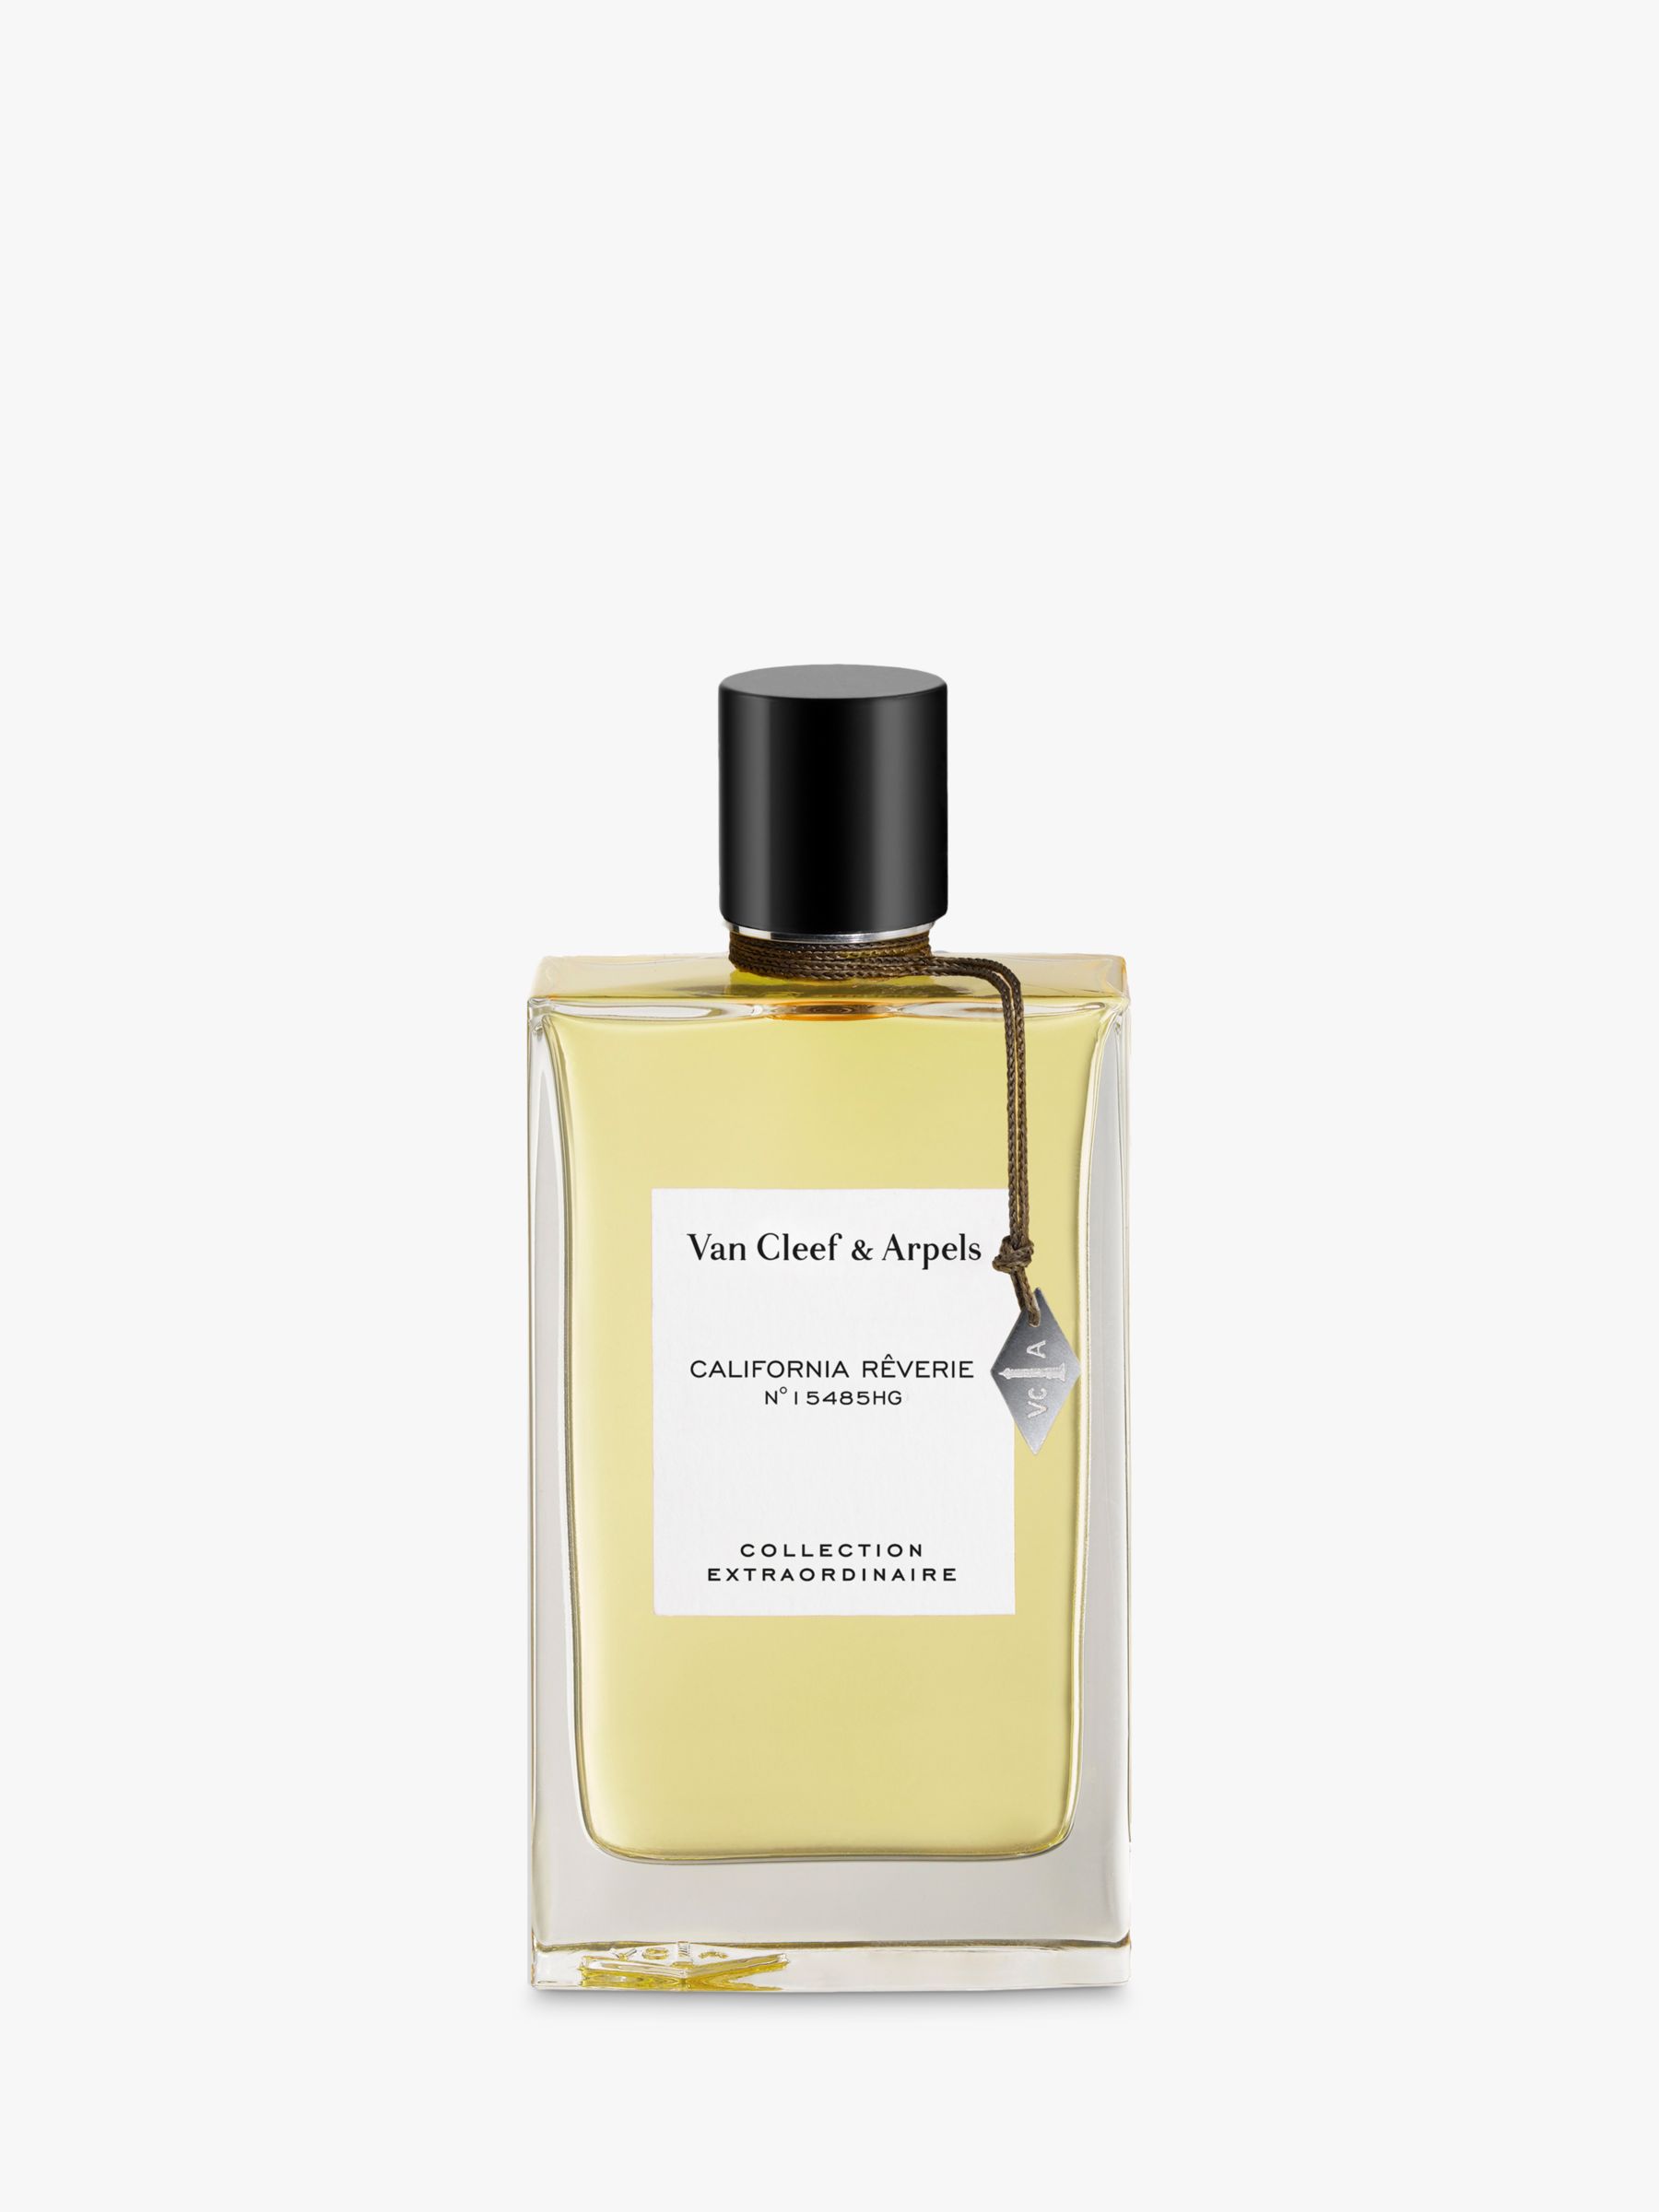 Van Cleef & Arpels Collection Extraordinaire California Rêverie Eau de Parfum, 75ml 1